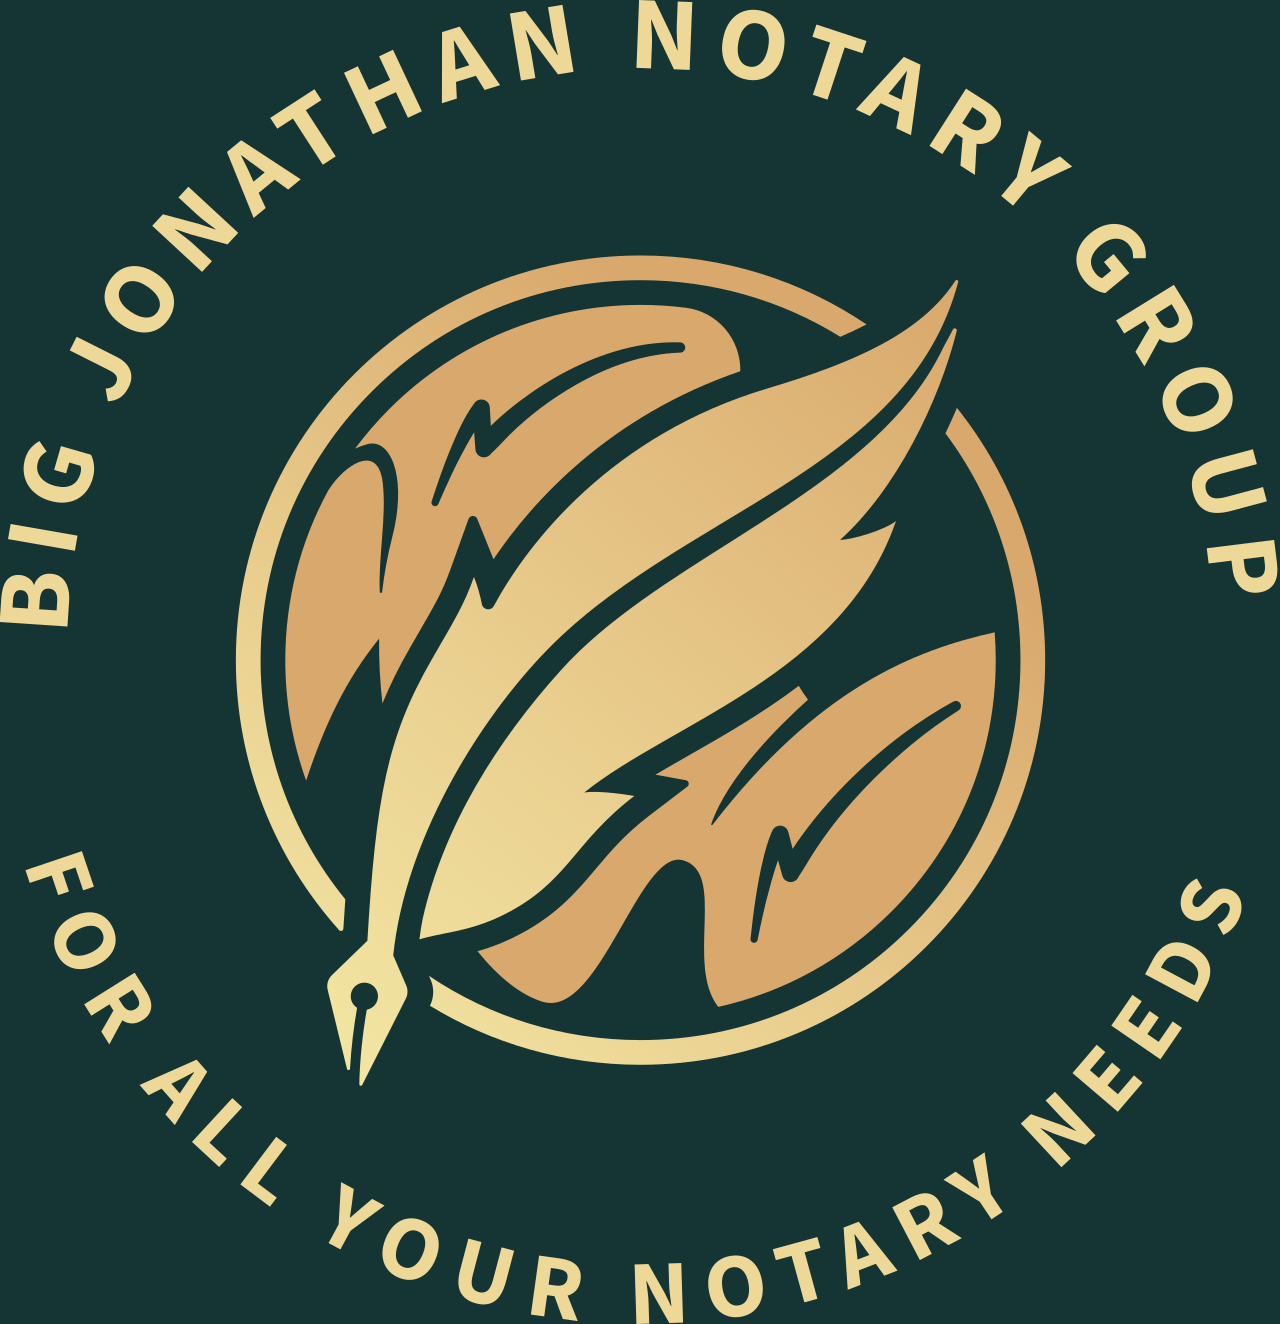 Big Jonathan notary group 's web page